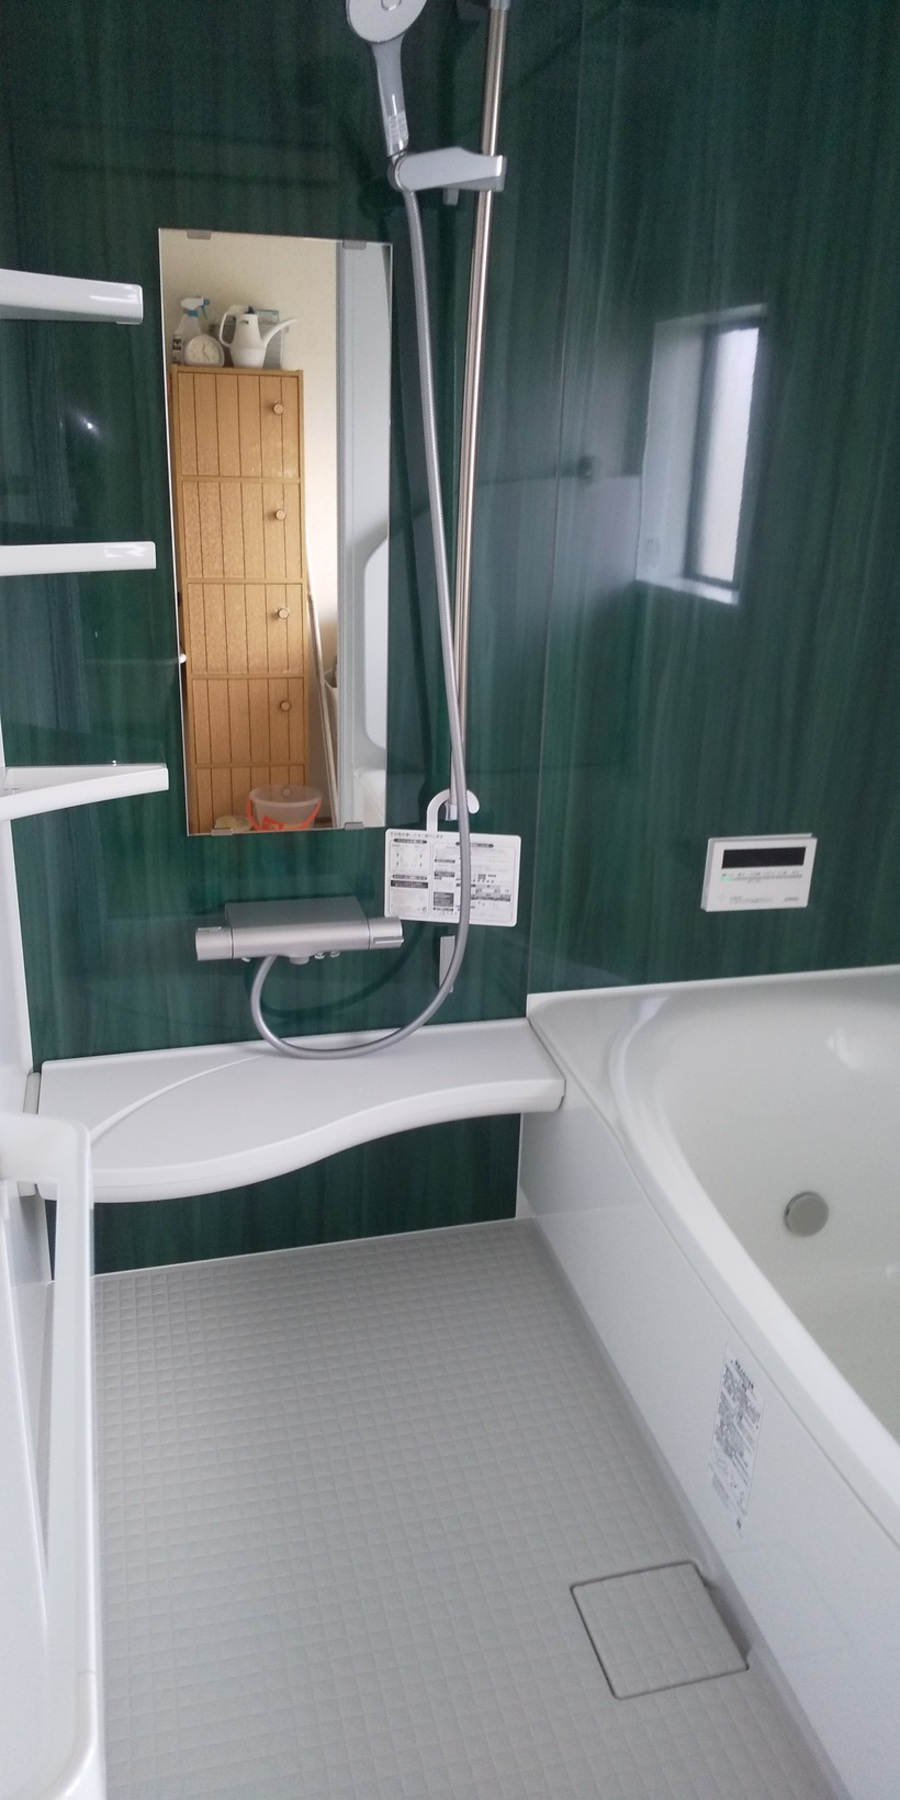 ２Ｆ浴室ユニットバス入替工事のリフォーム写真